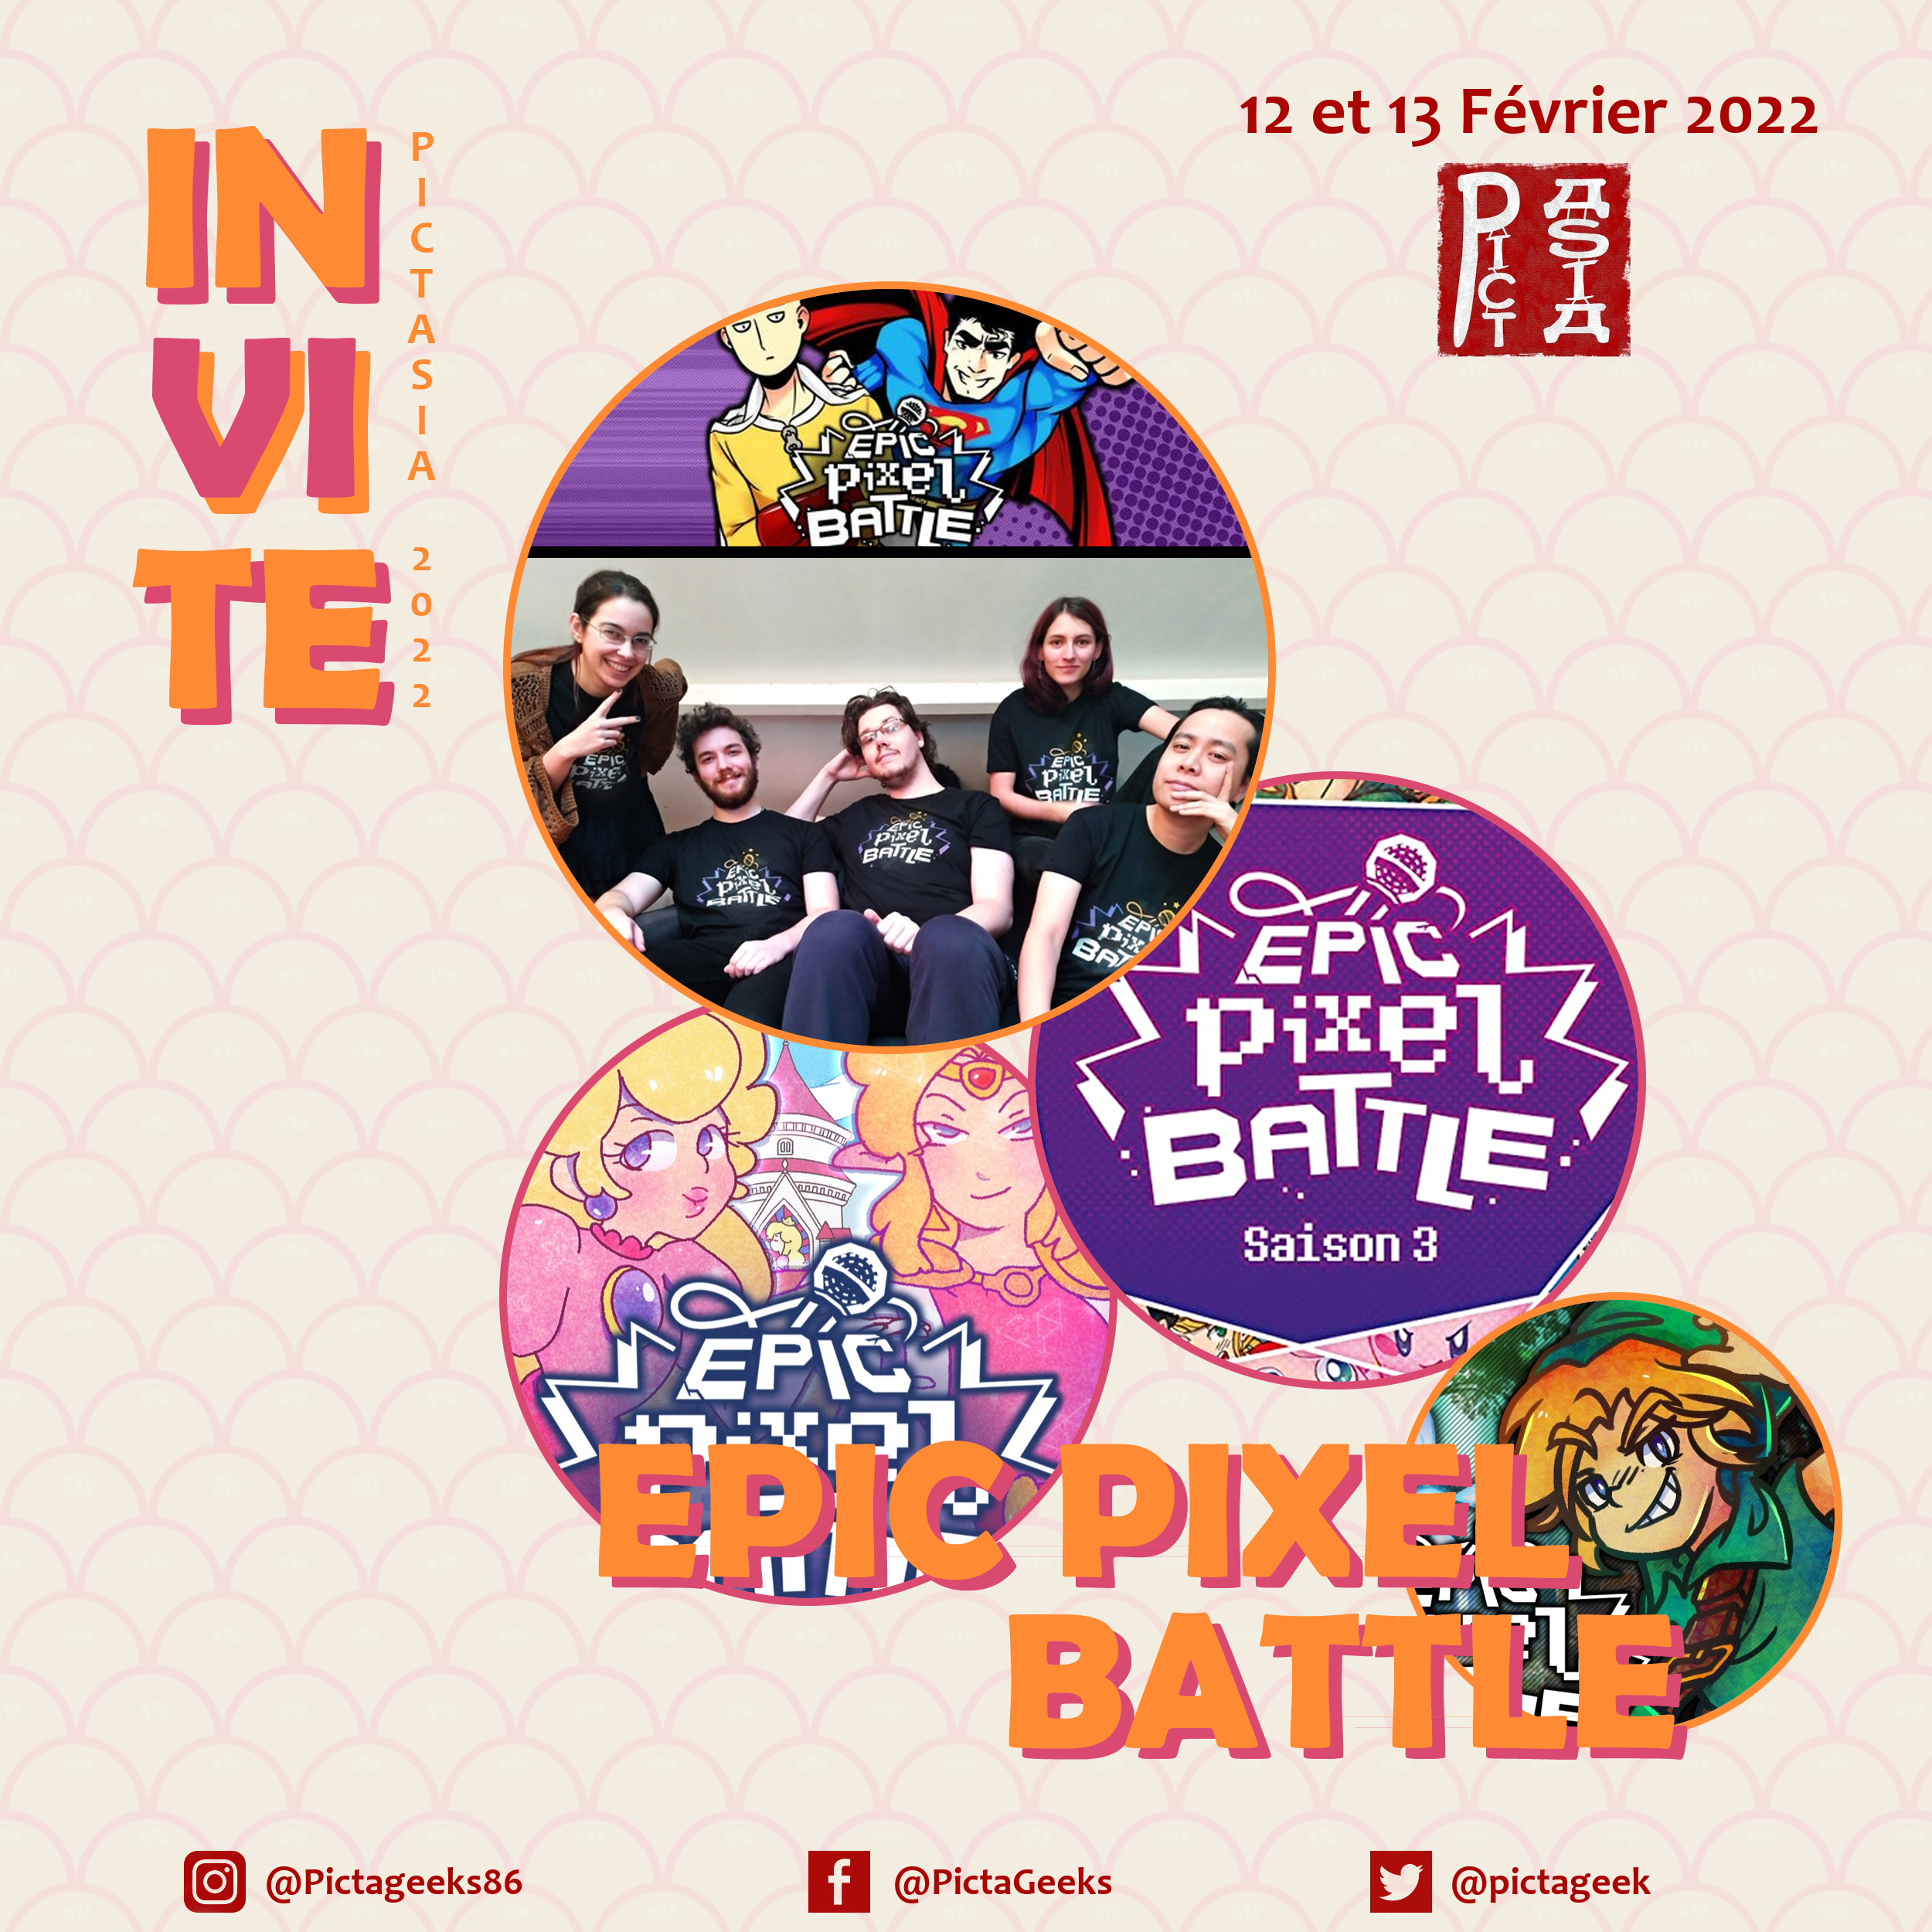 Epic Pixel Battle, EPB, Concert, rap, hip hop, manga, gaming, jeuvideo, Pictasia, Pict'Asia, Pictageek, Poitiers